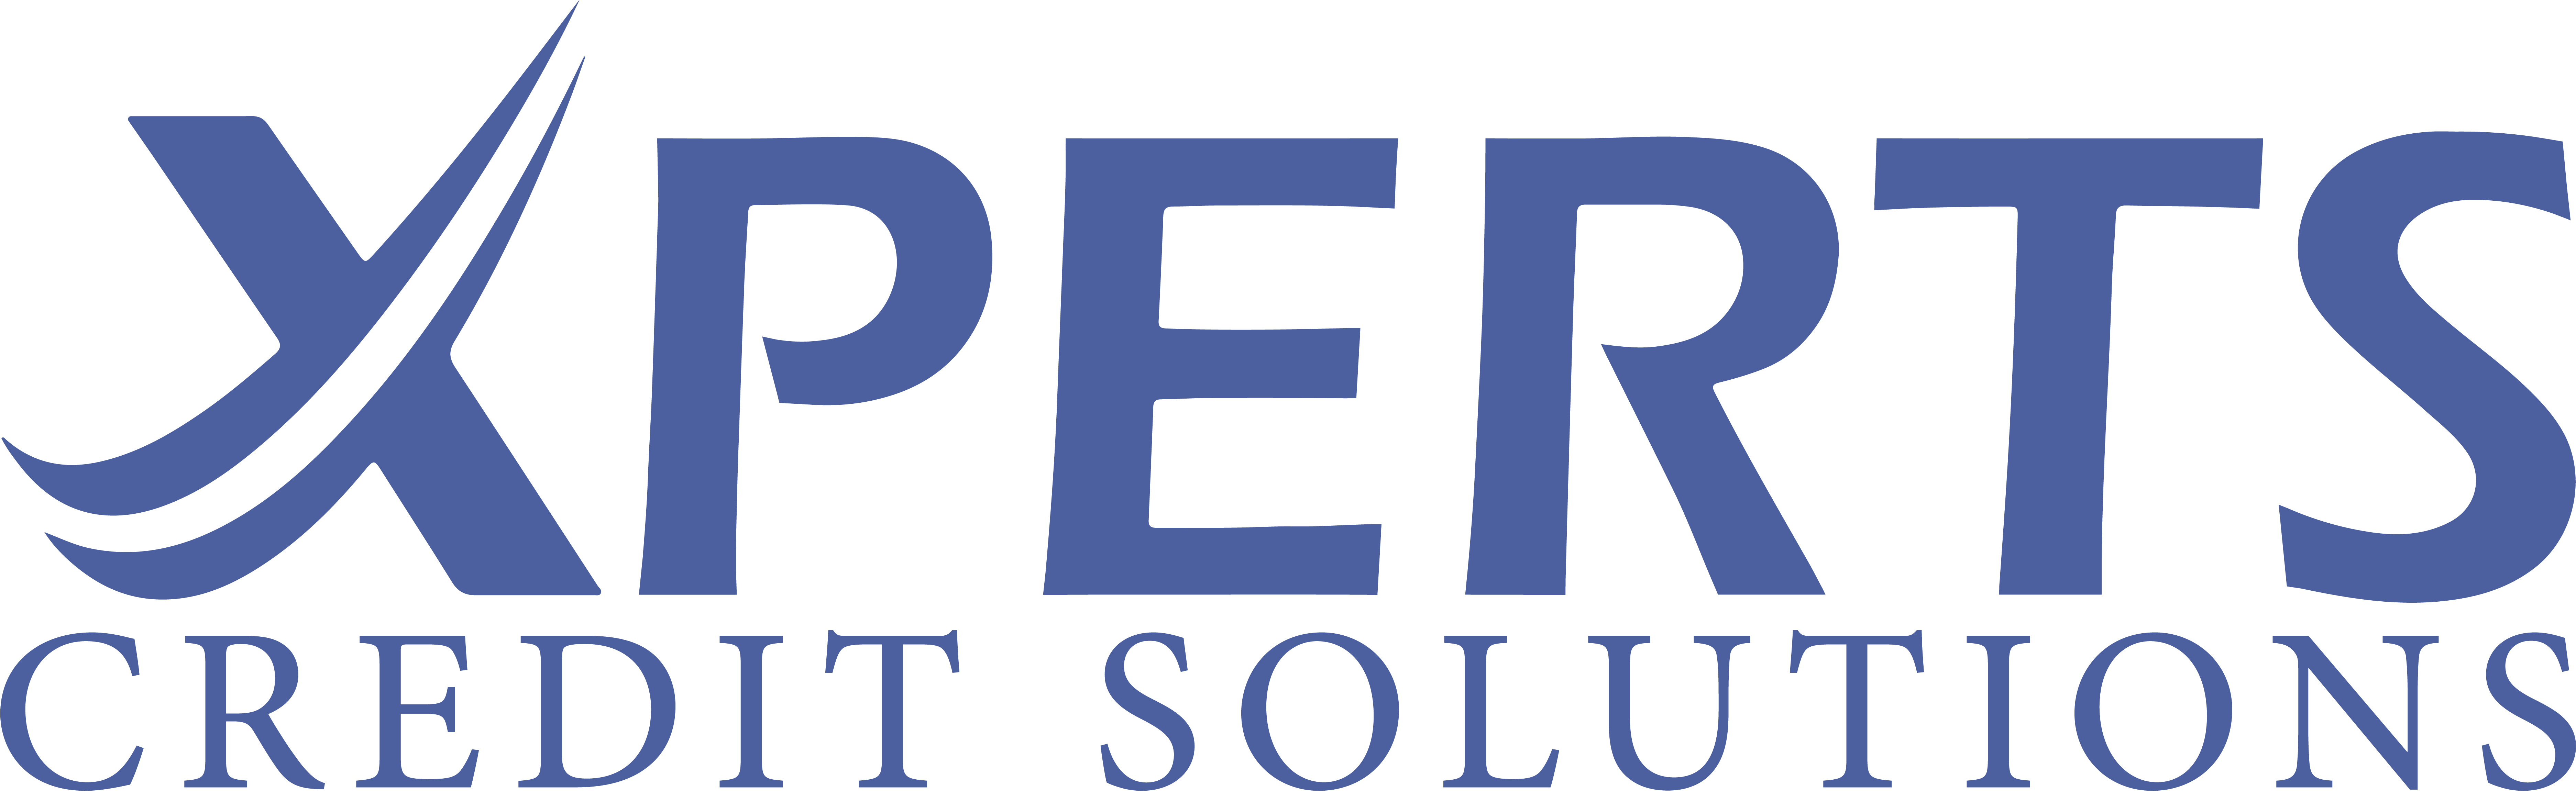 Xperts Credit Solutions